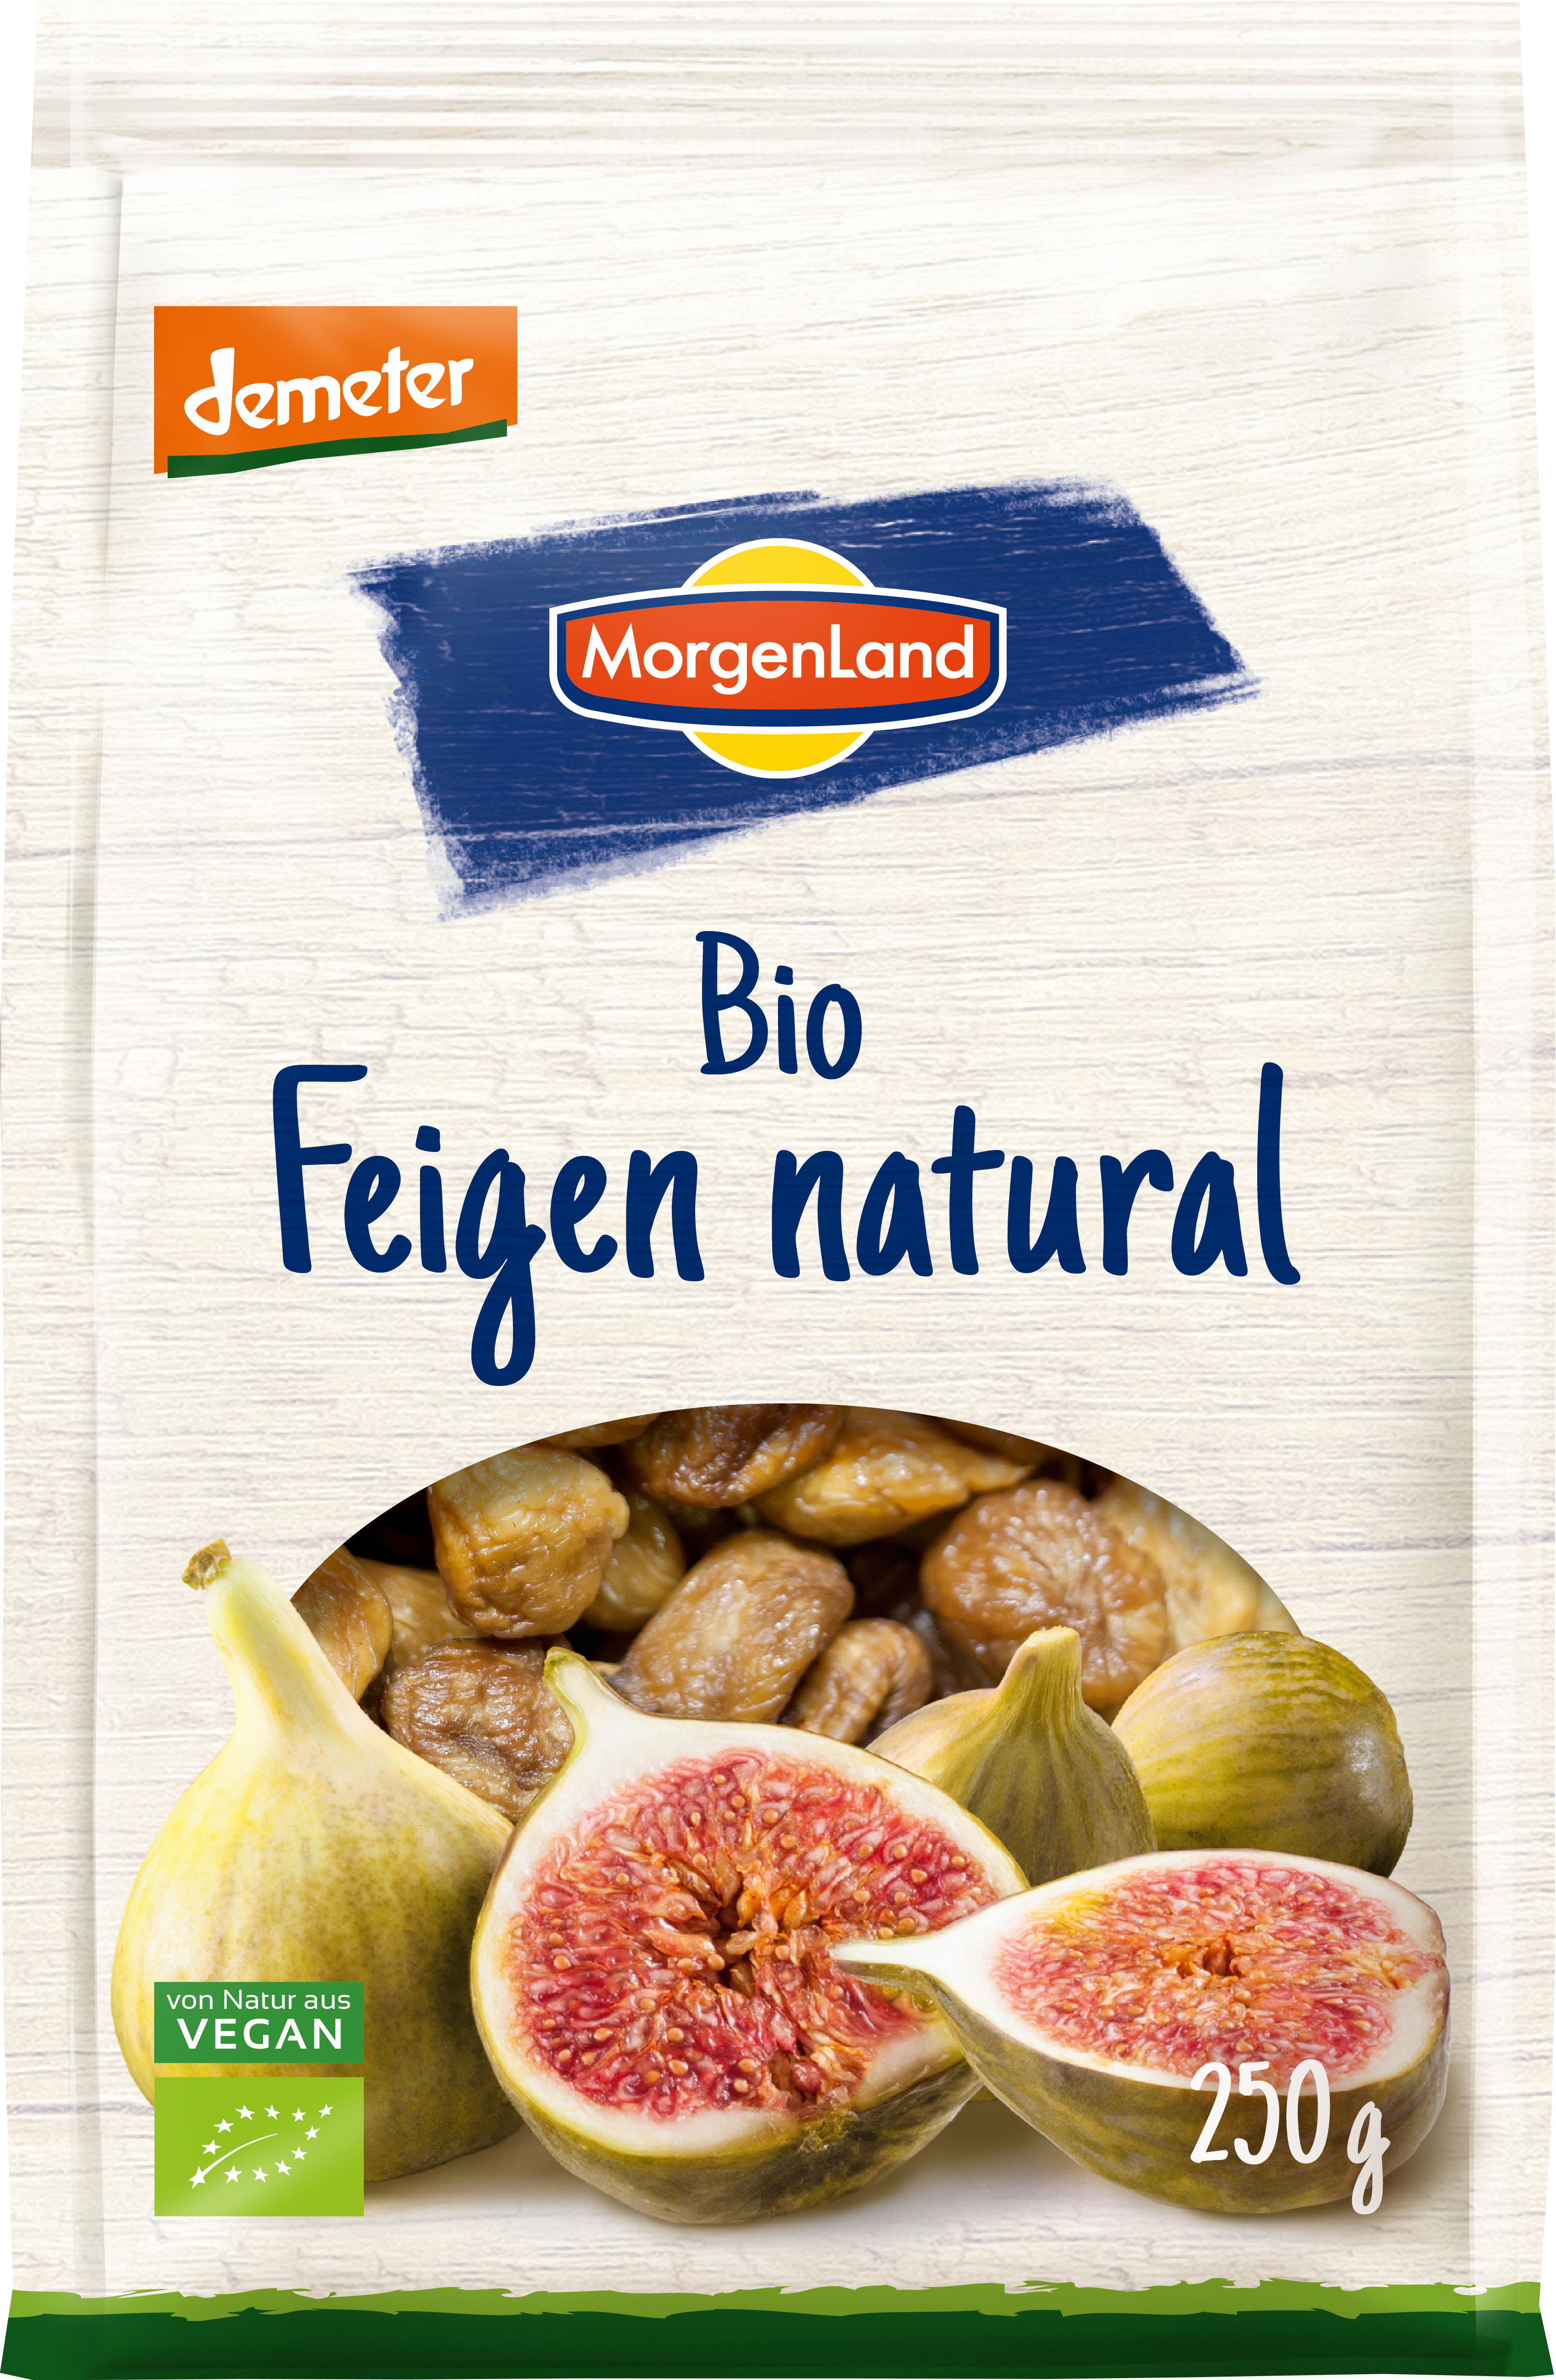 MorgenLand Feigen natural demeter 250g/nl